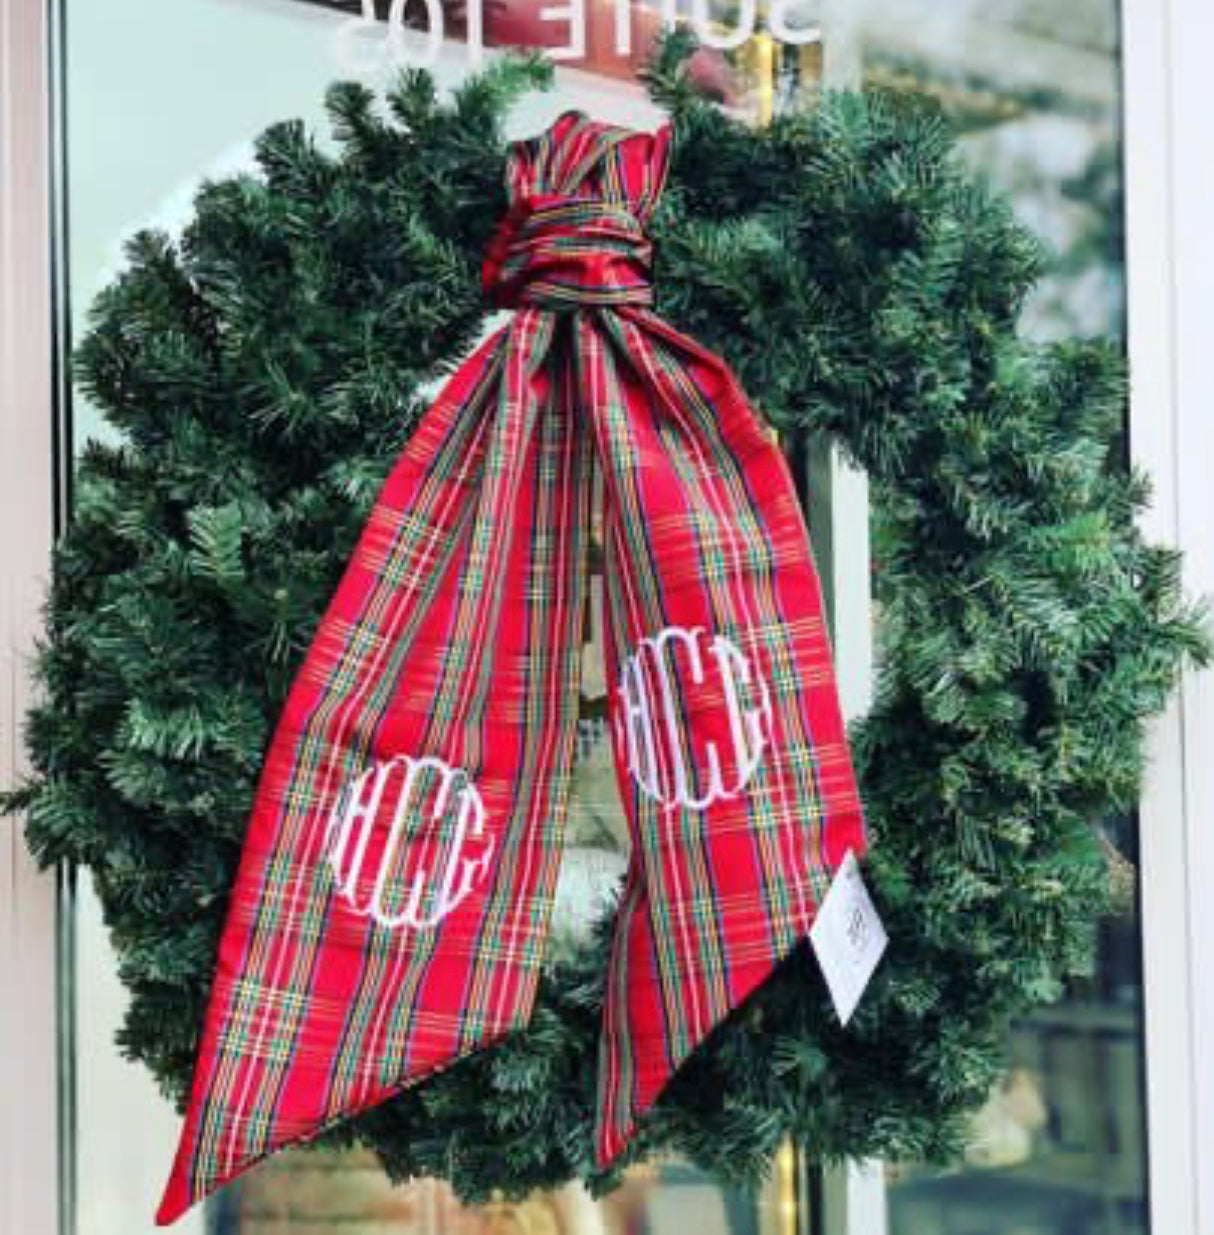 Personalized Christmas Wine Glasses - Holiday Monogram Wreath